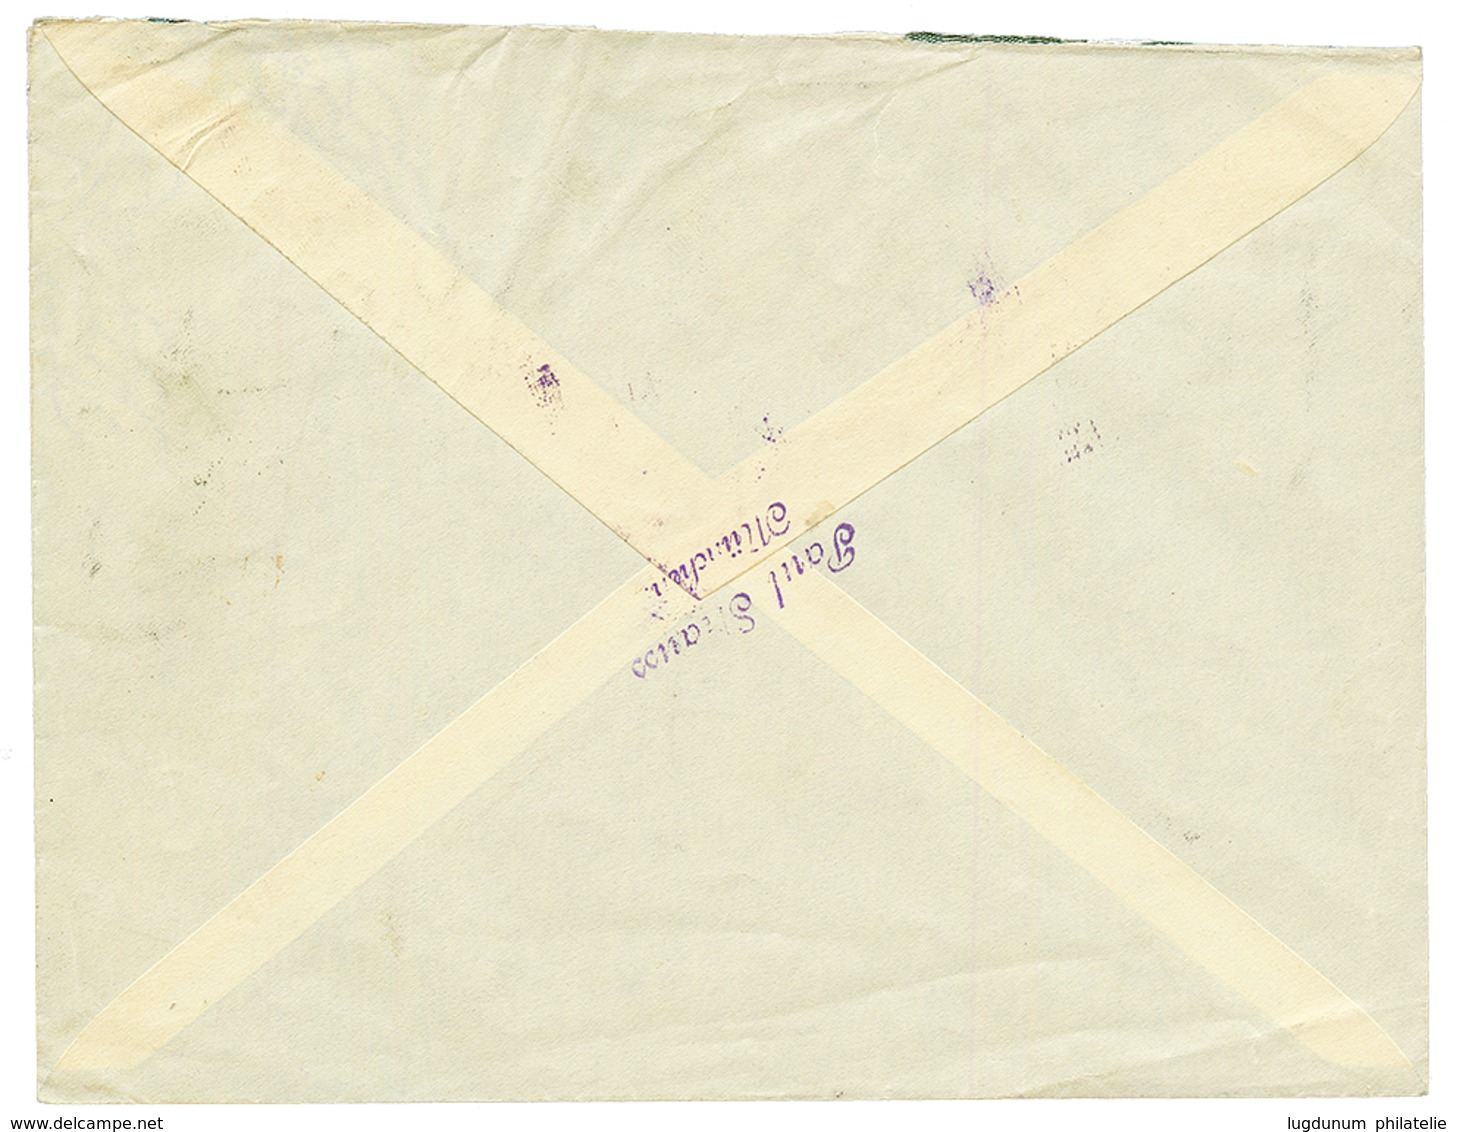 1914 2 GR. Canc. SHKODRE SCUTARI On REGISTERED Envelope To AUSTRIA. Superb. - Albanie